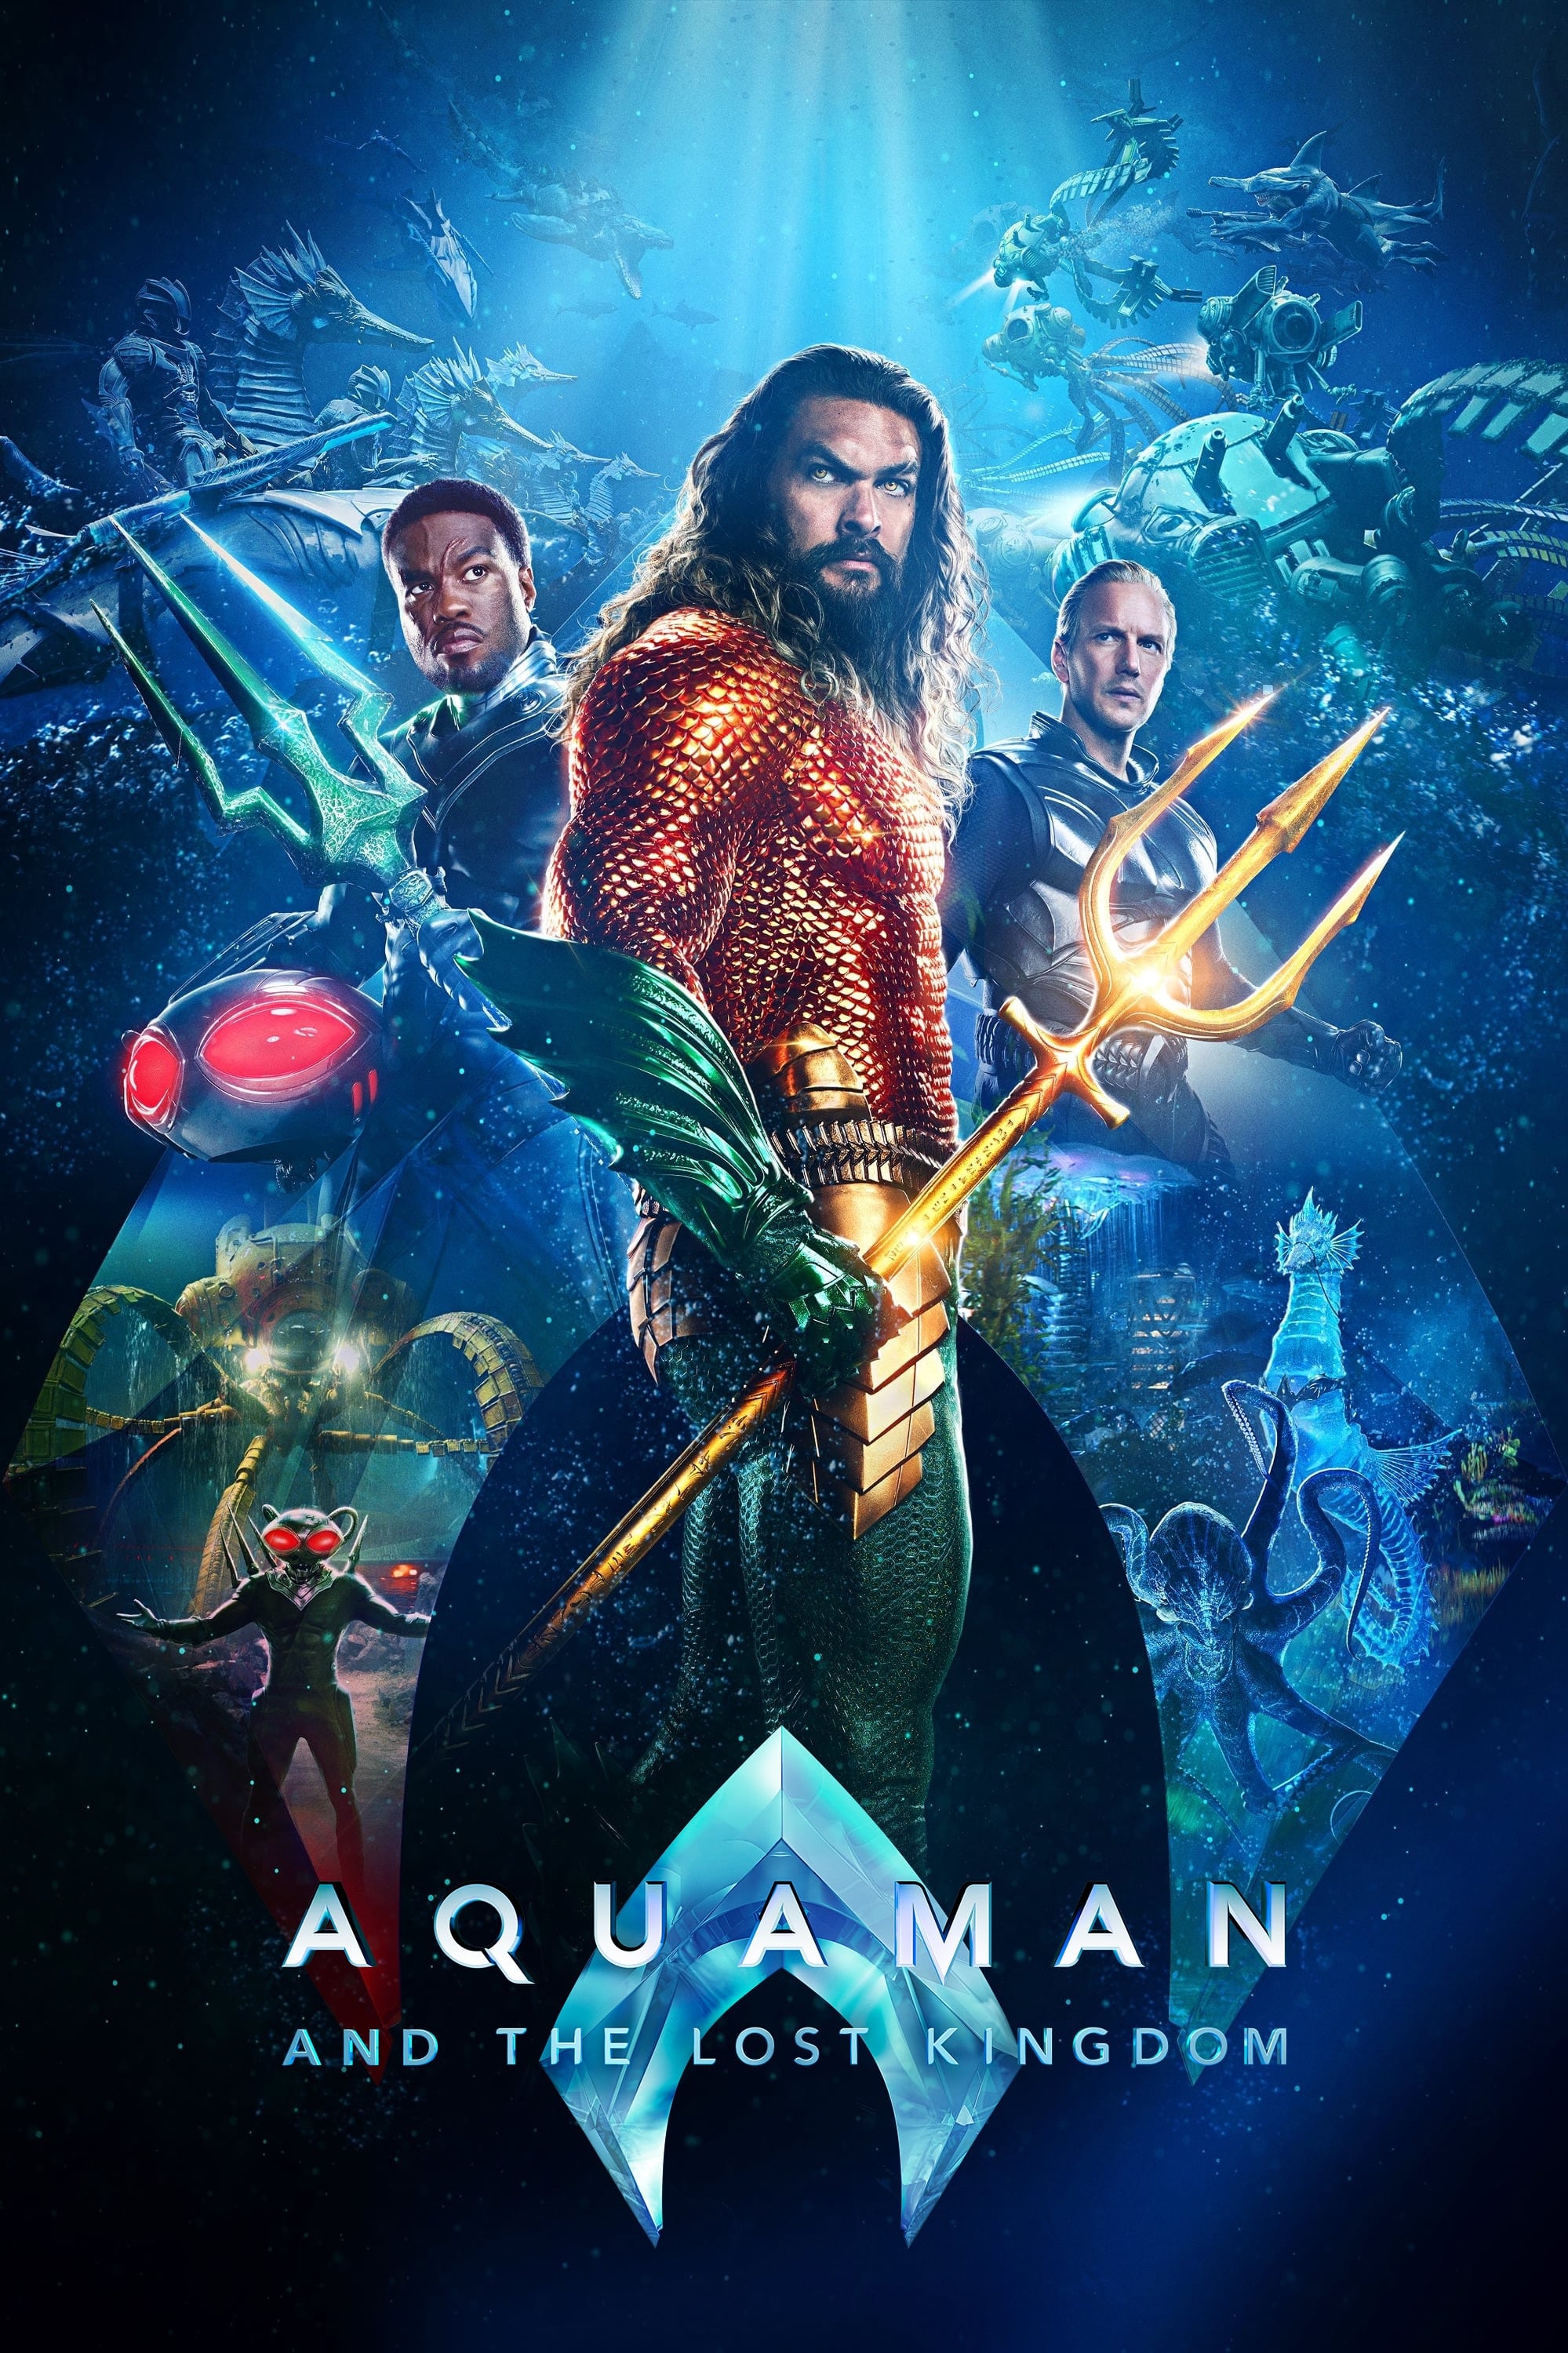 Stiahni si Filmy s titulkama Aquaman a ztracené království  / Aquaman and the Lost Kingdom (2023)(EN)[2160p][HDR] = CSFD 65%